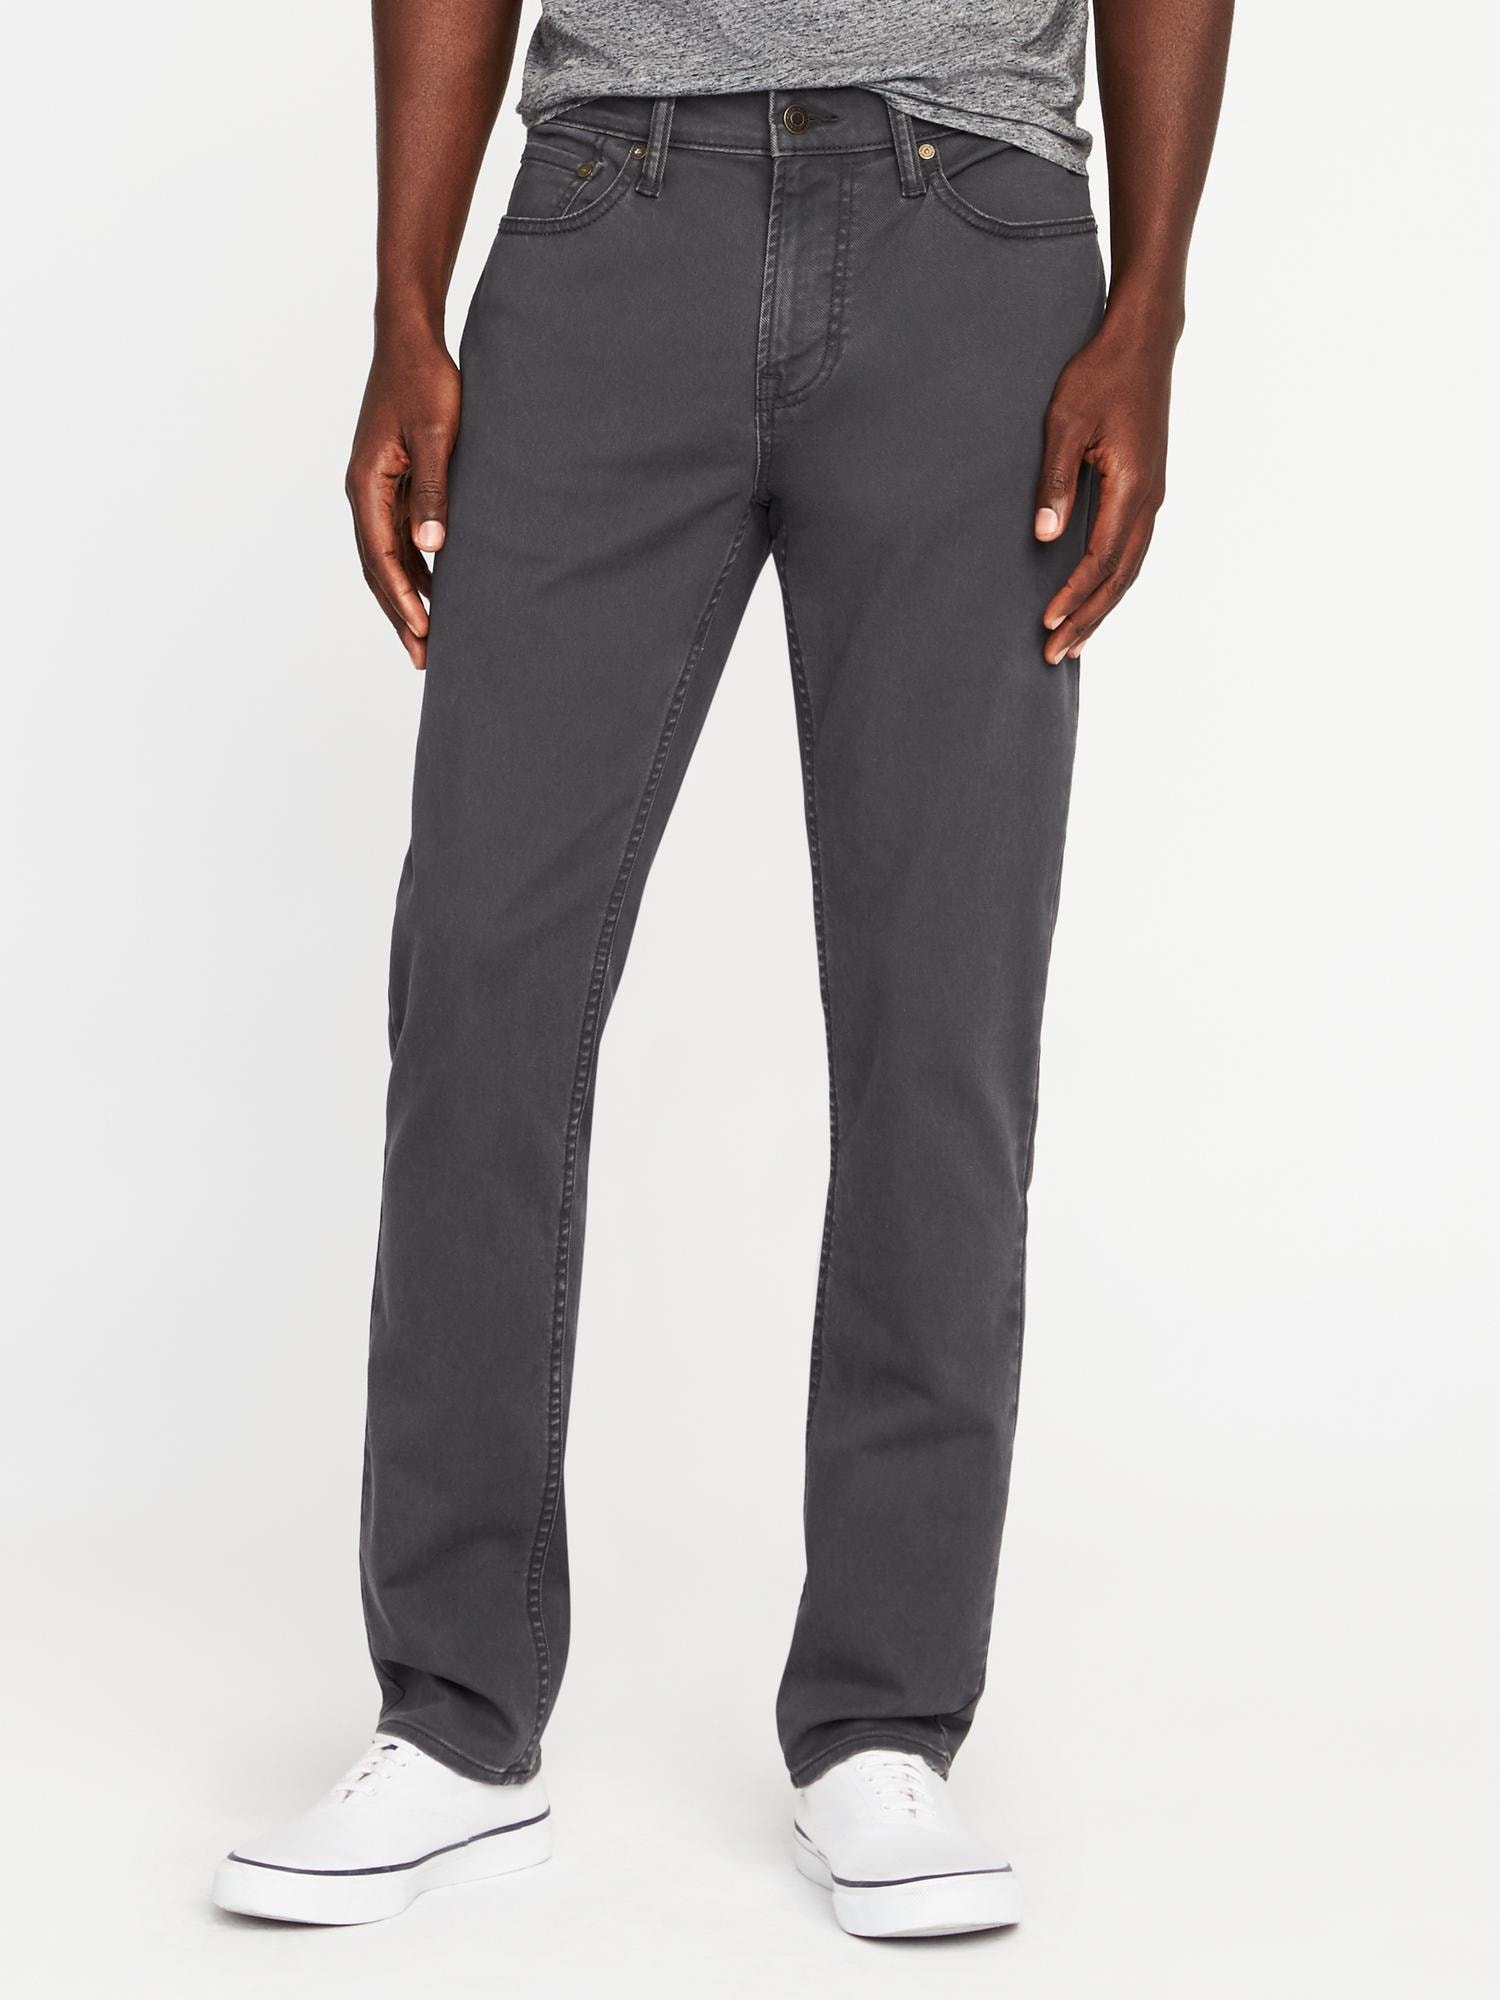 Slim Built-In Flex Twill Five-Pocket Pants for Men